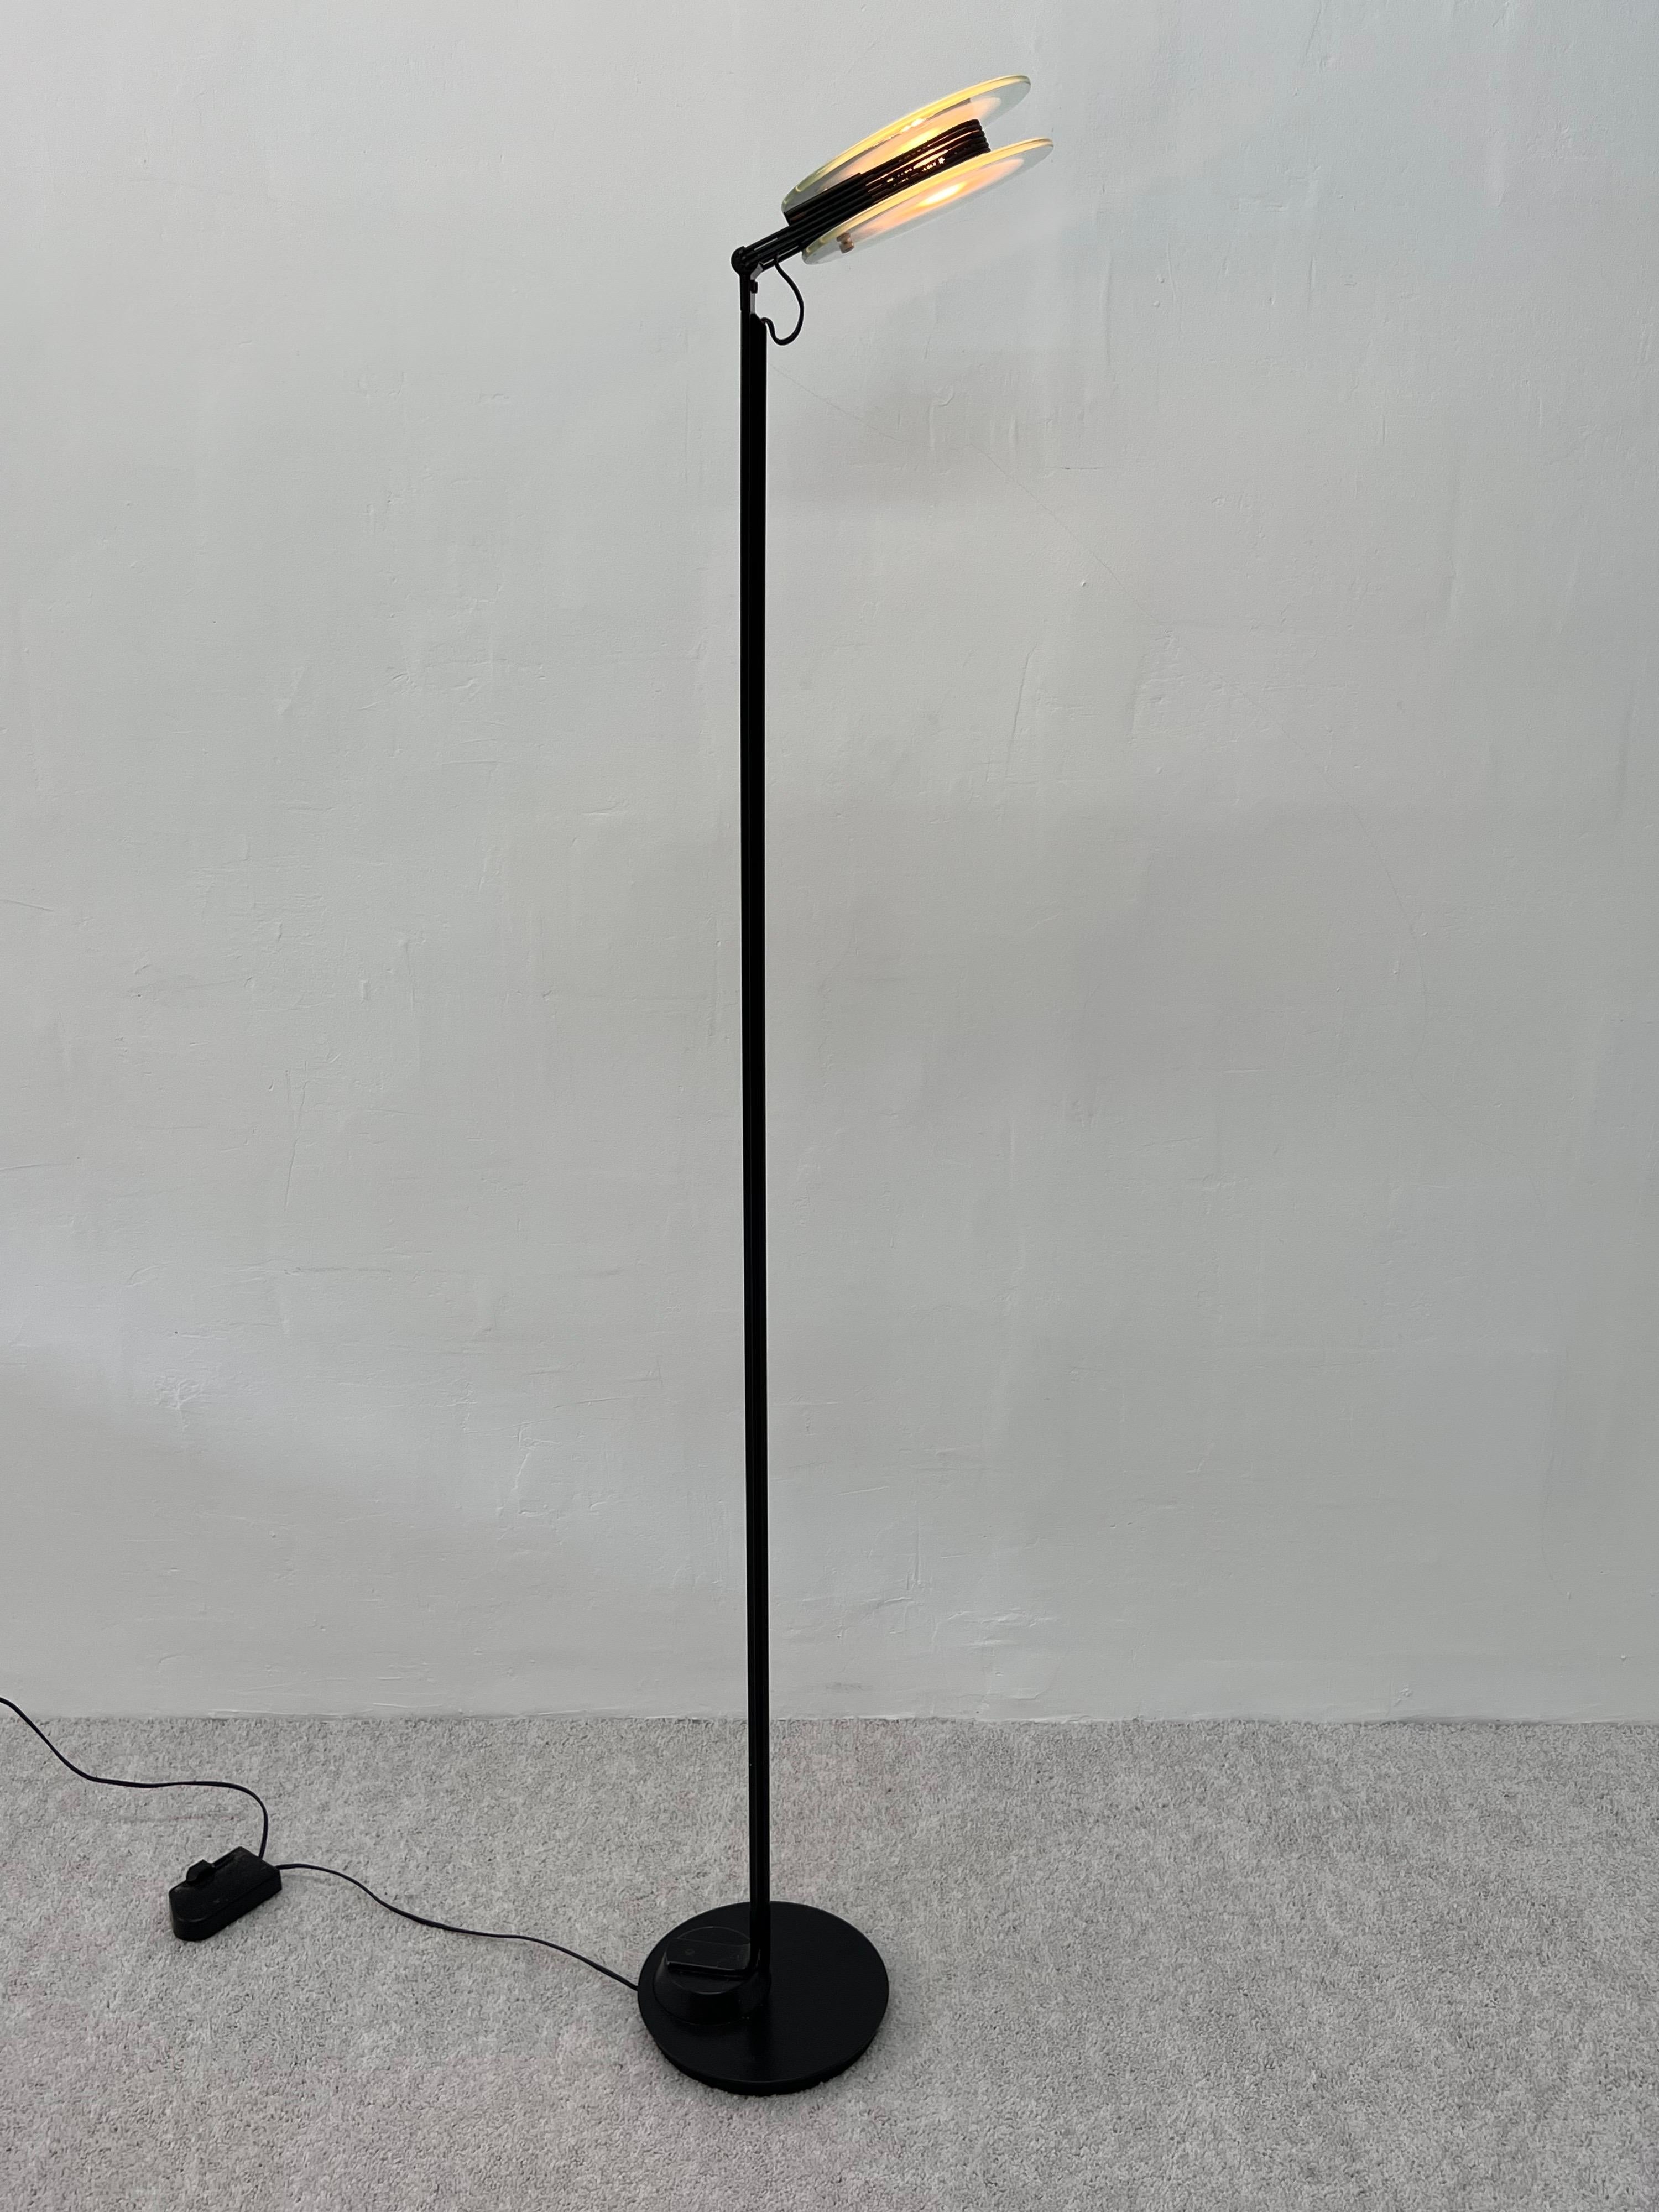 Postmodern Belux black enameled steel frame floor lamp with adjustable head halogen lamp and two glass pane diffusers.  Made in Spain.